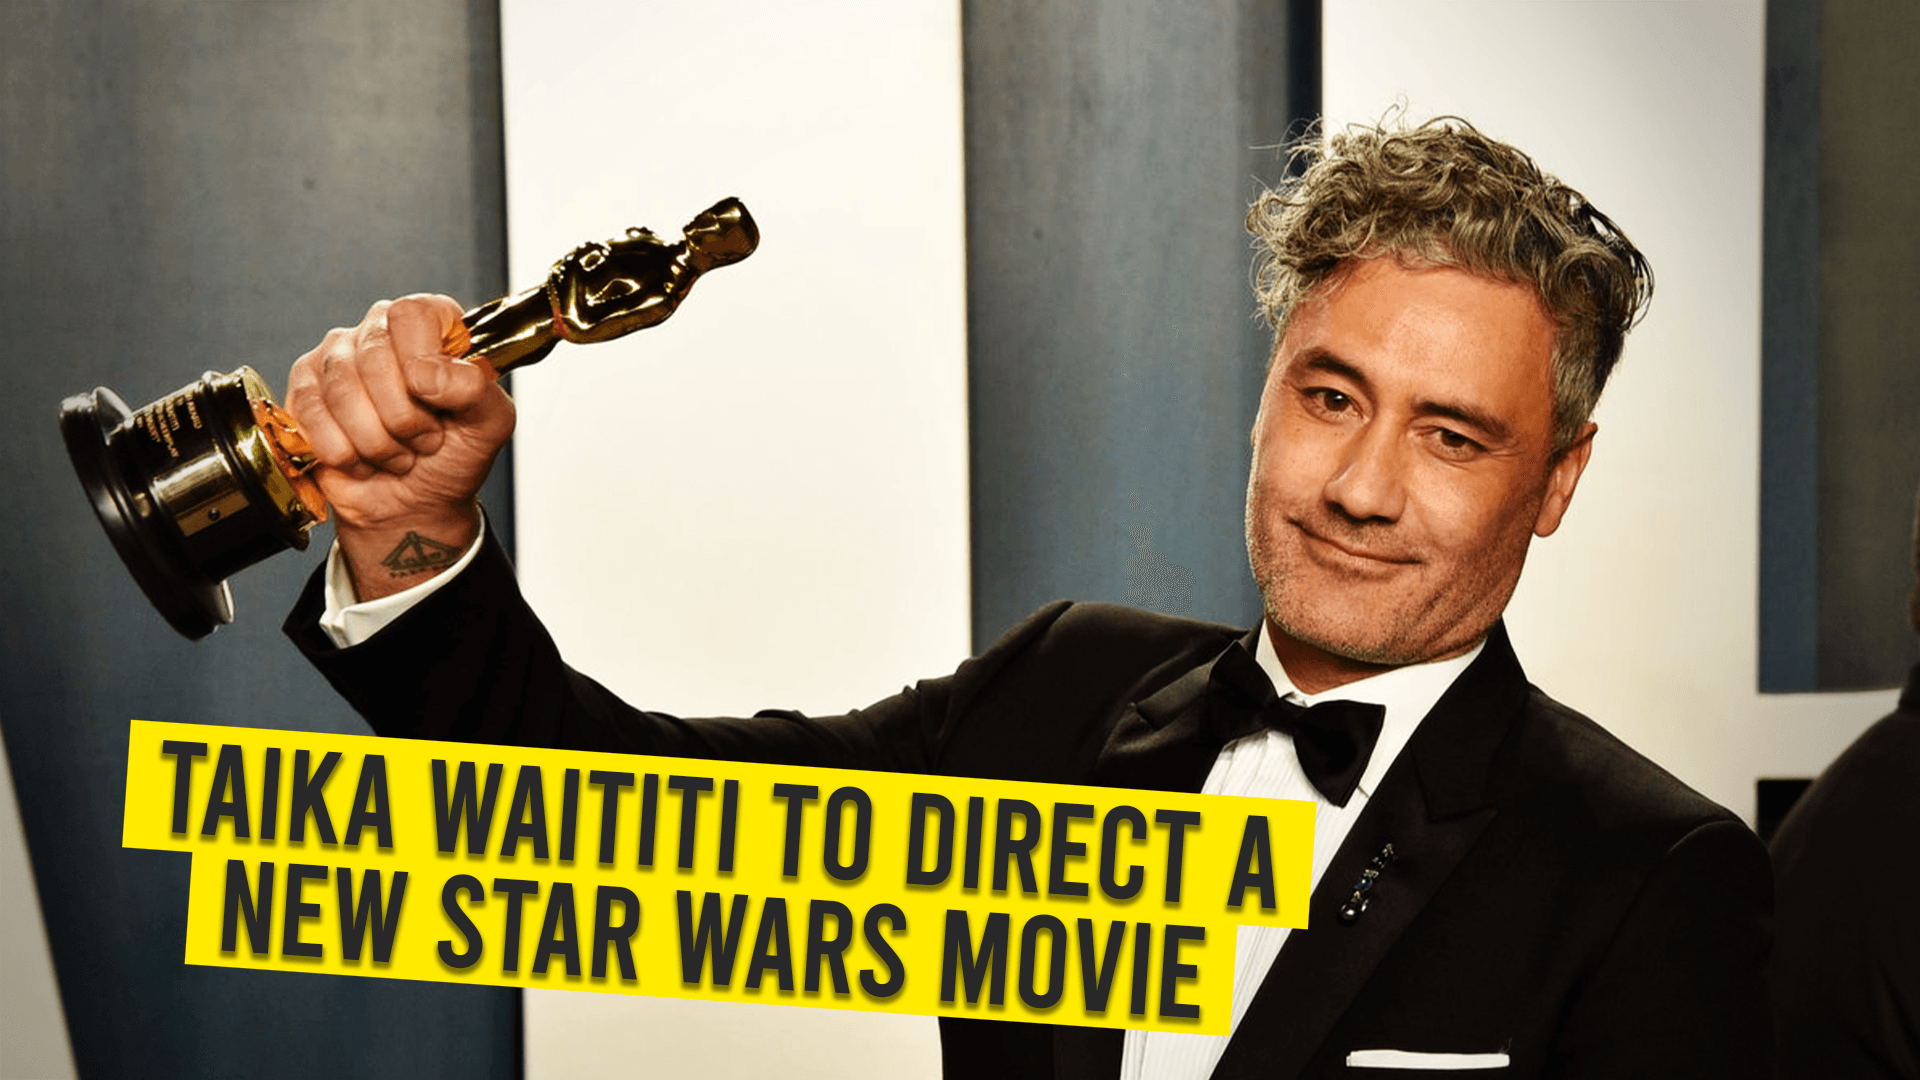 Taika Waititi To Direct A New Star Wars Movie